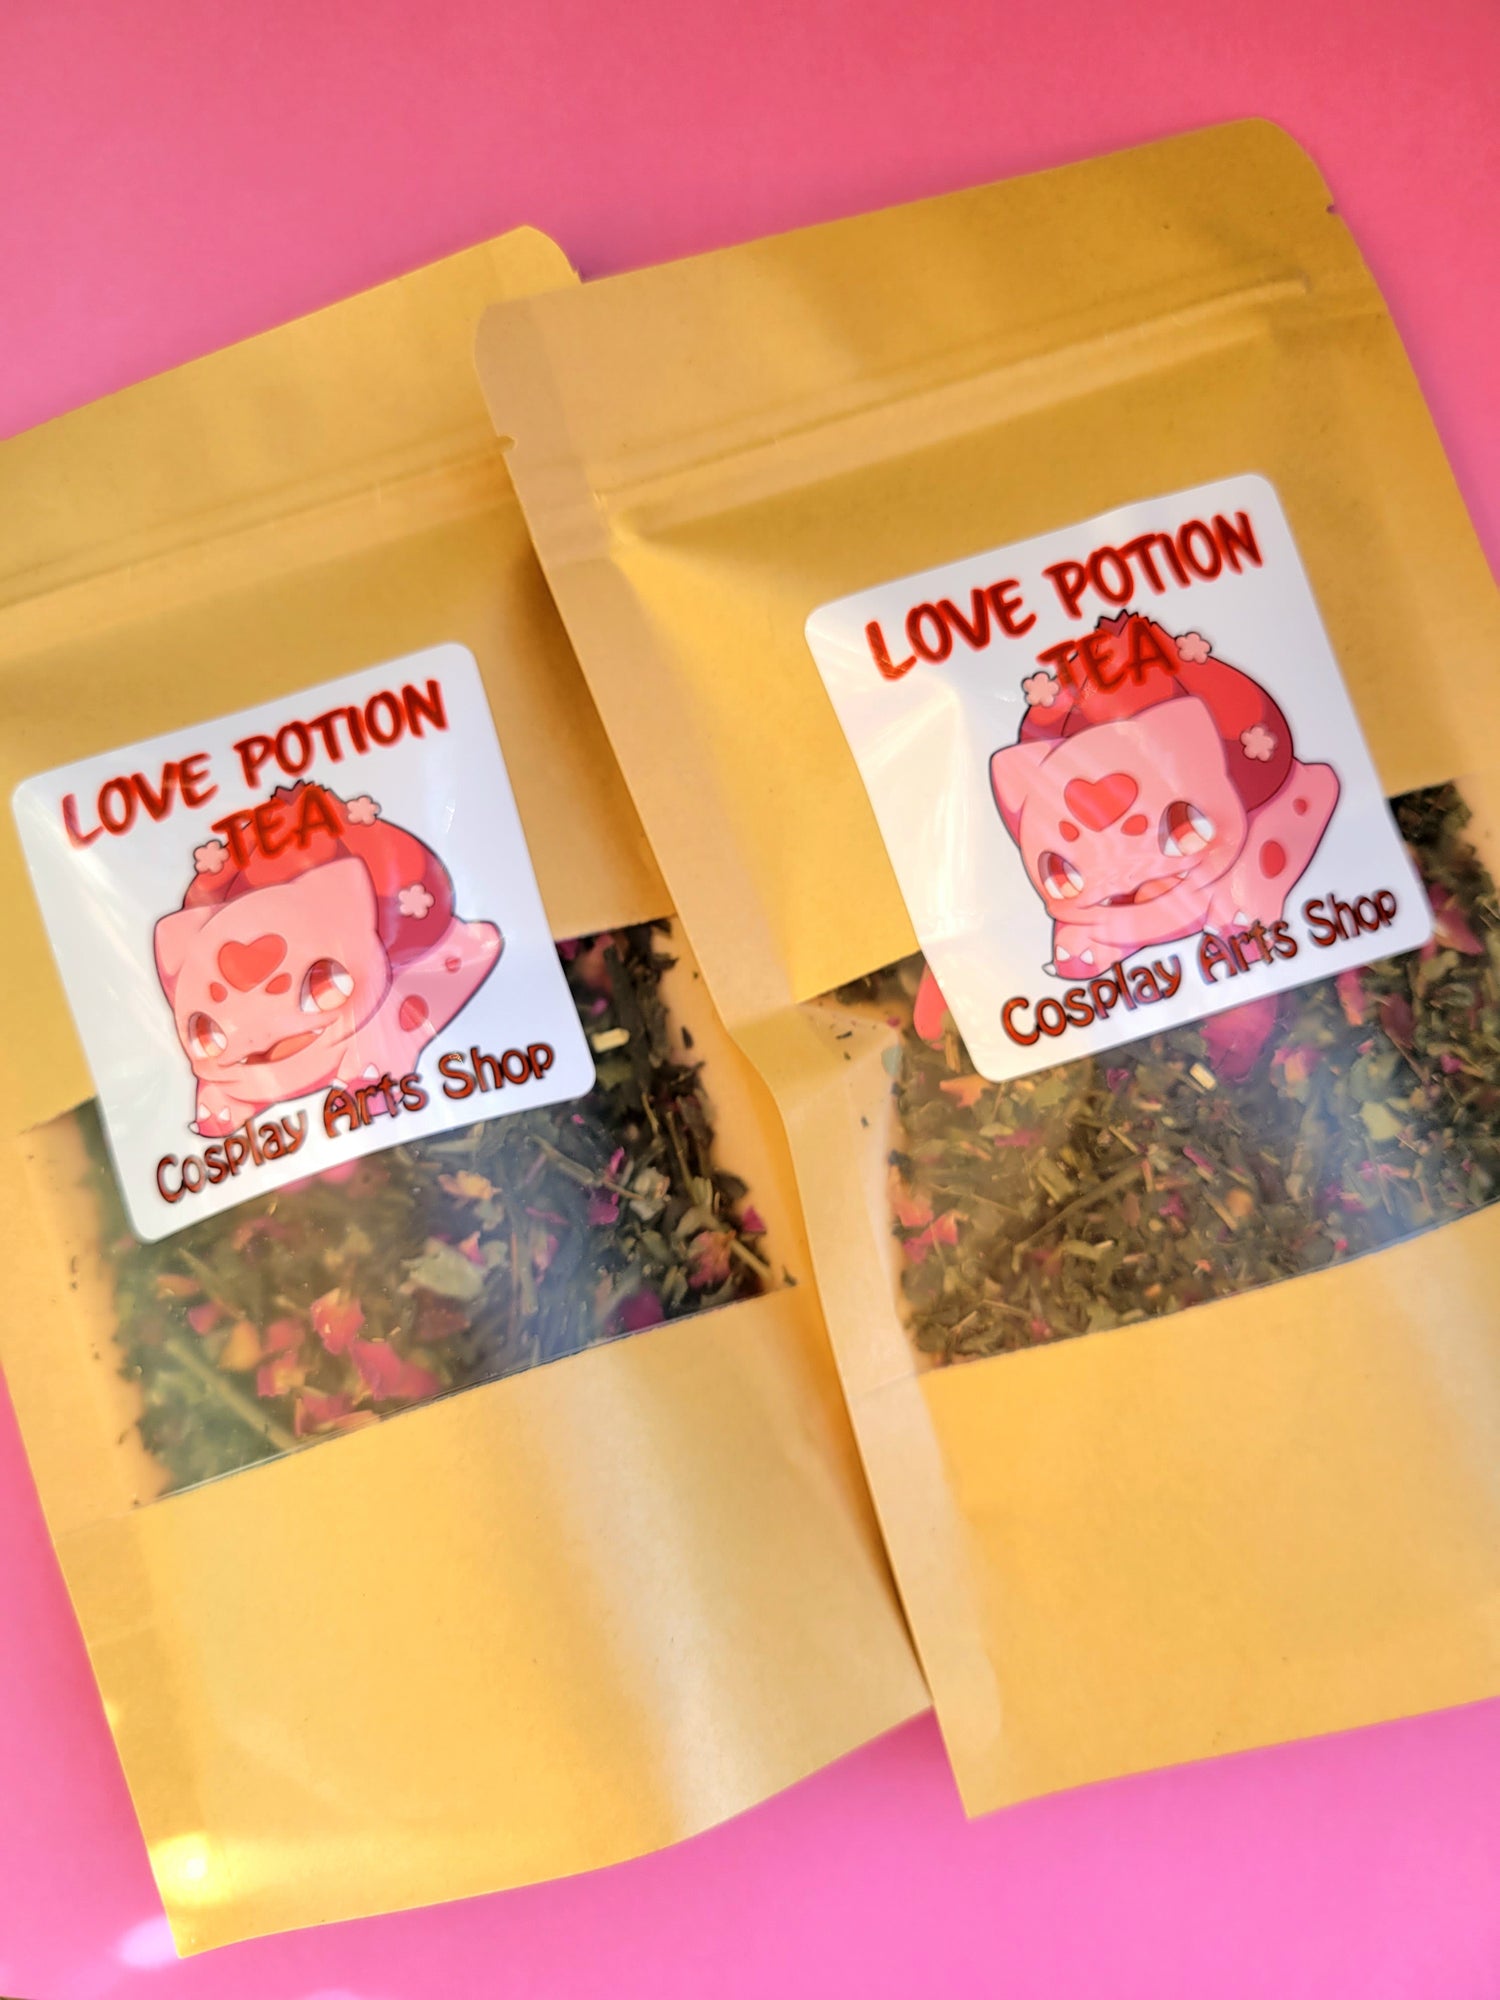 Love Potion Tea - Cosplay Arts Shop